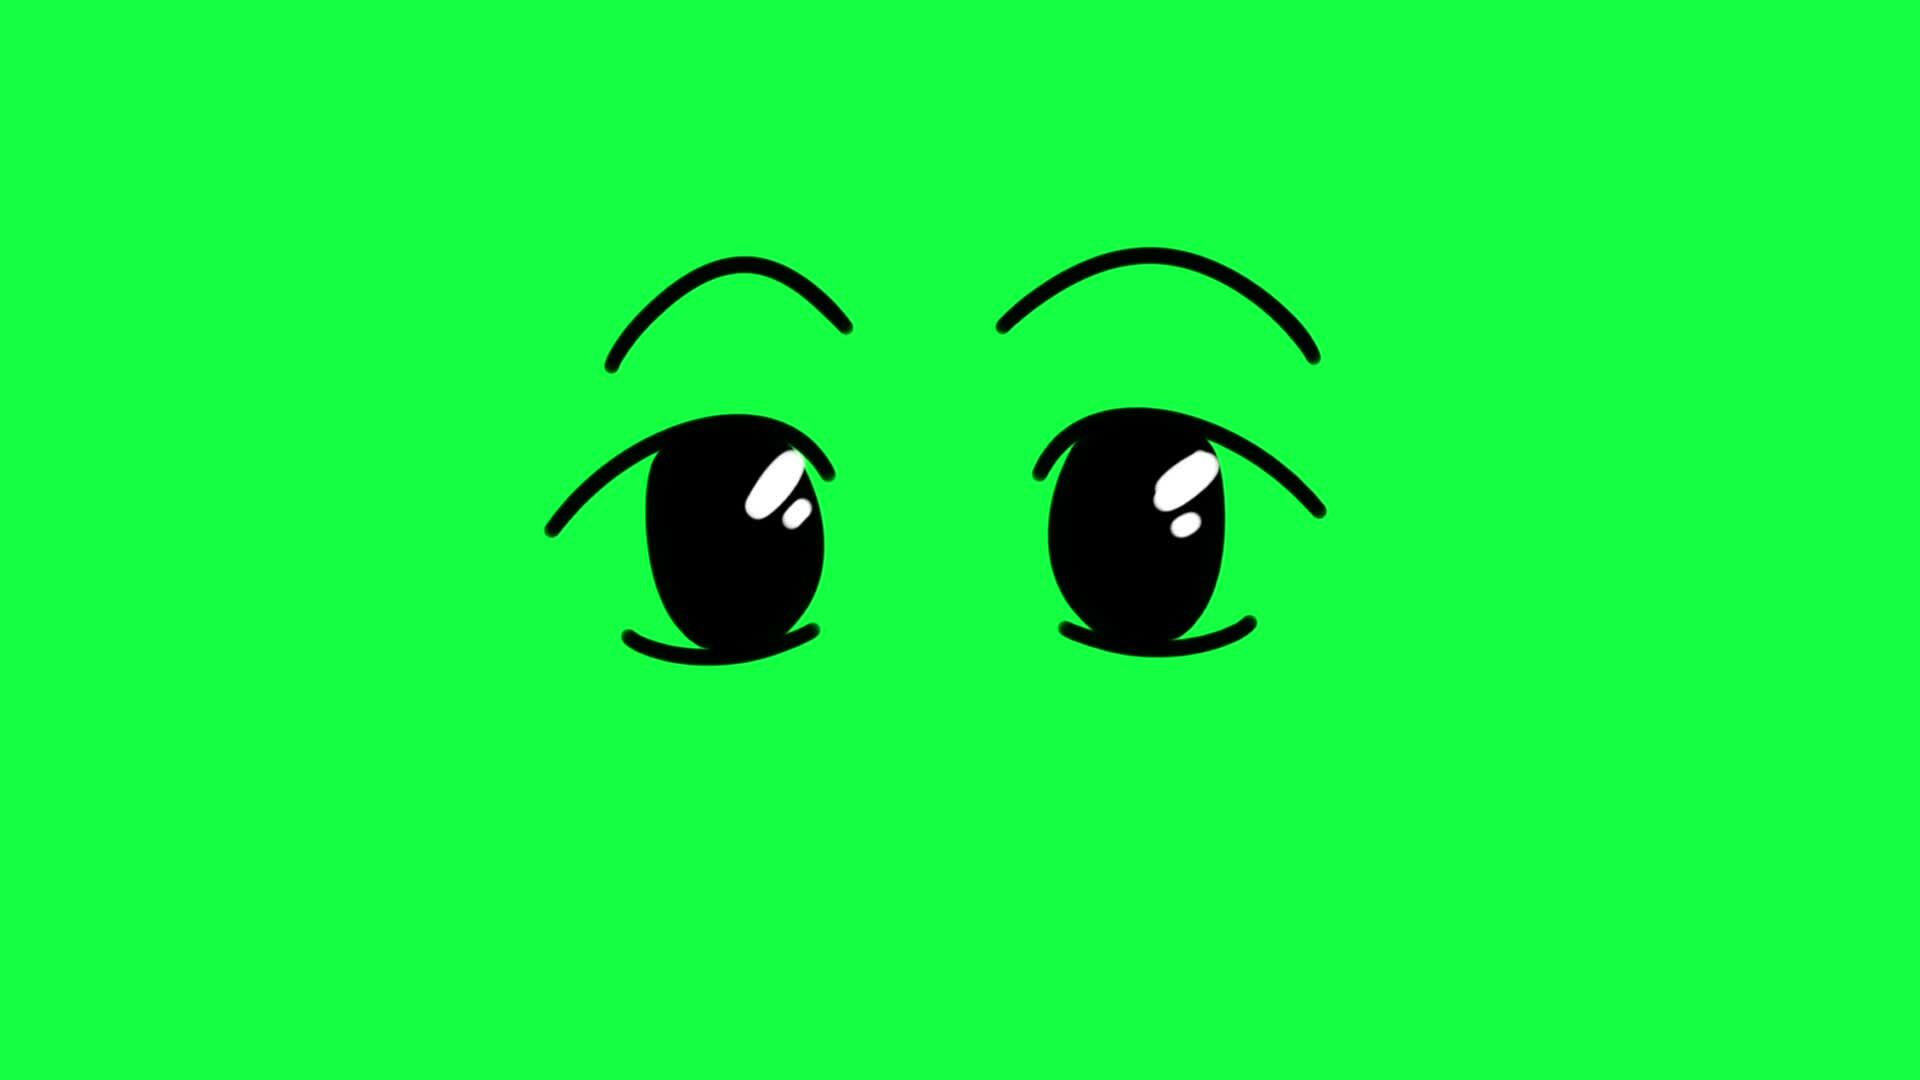 Green Screen Anime  Cartoon Eyes video effects  YouTube